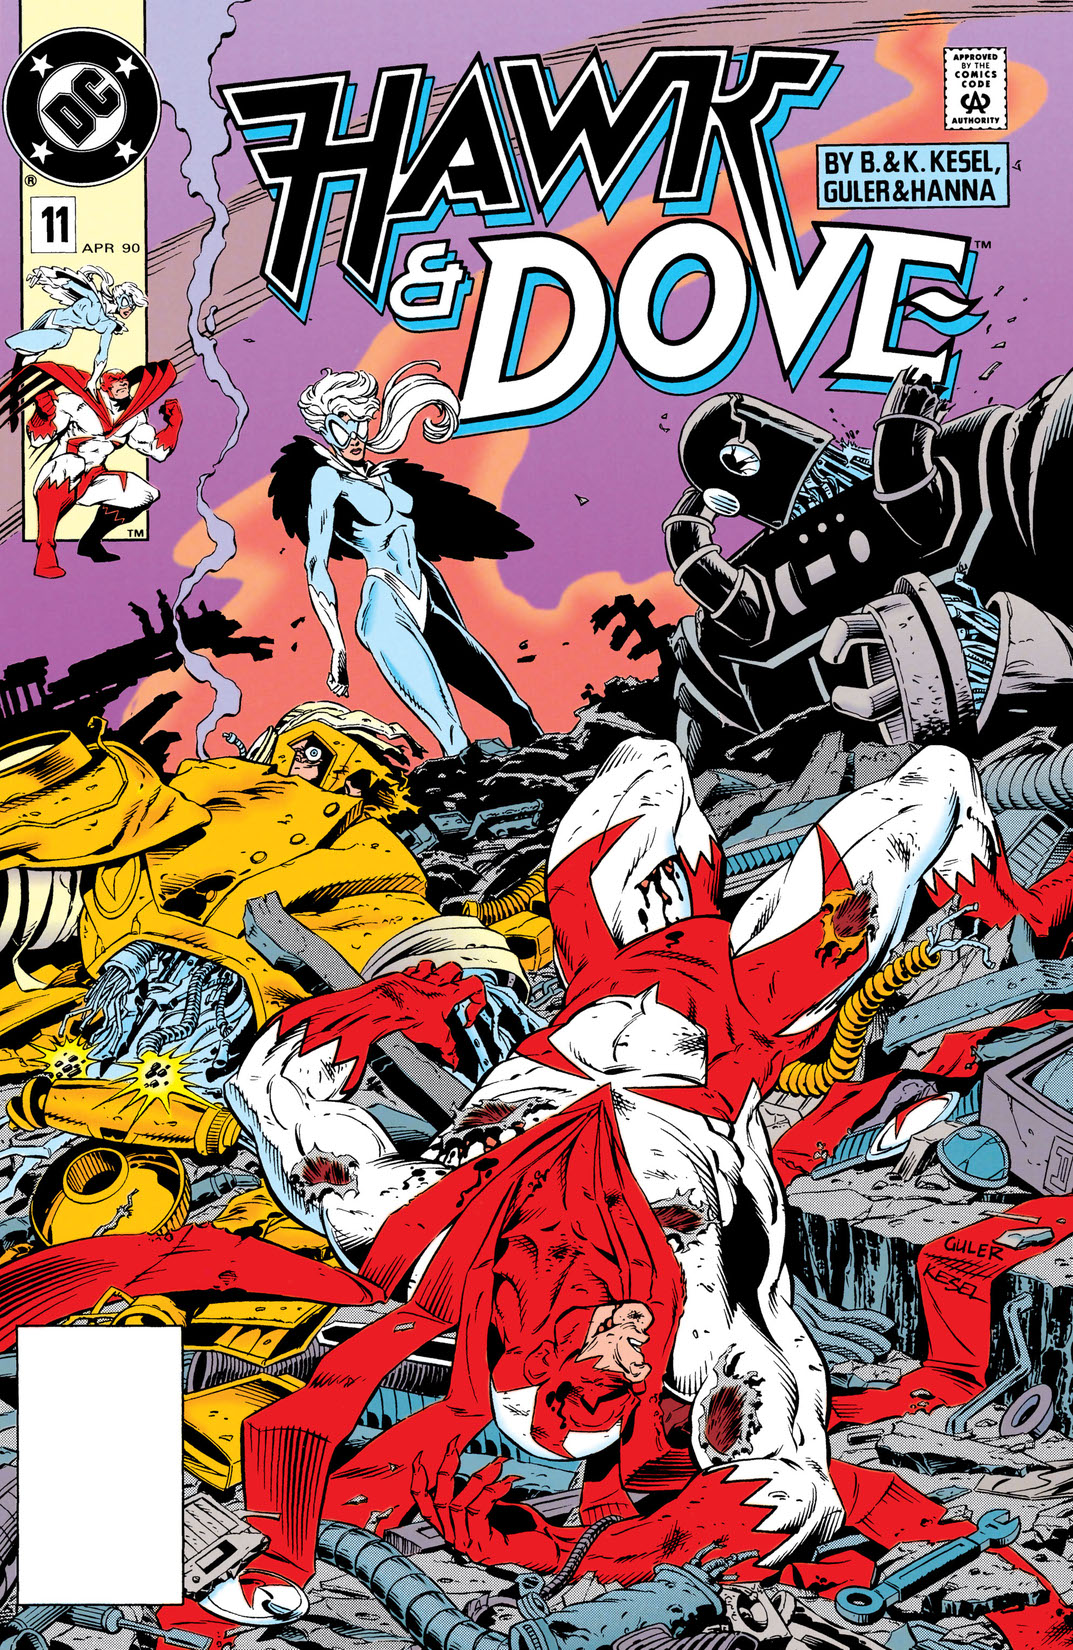 Hawk & Dove (1989-) #11 preview images